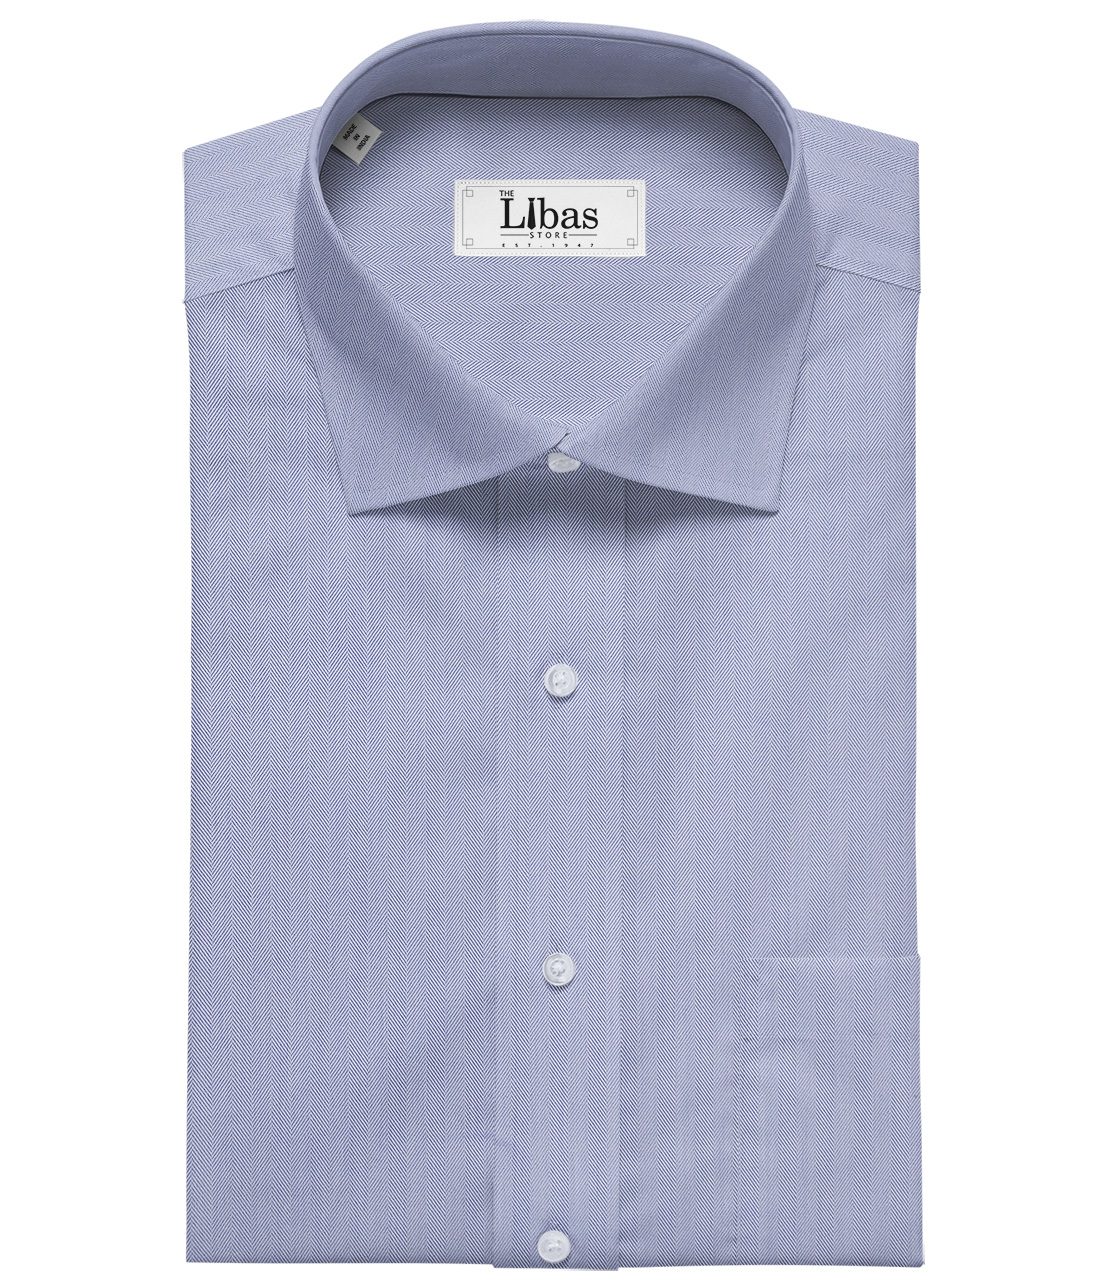 Cadini Italy Men's Sky Blue 100% Cotton Herringbone Weave Shirt Fabric (1.60 M)